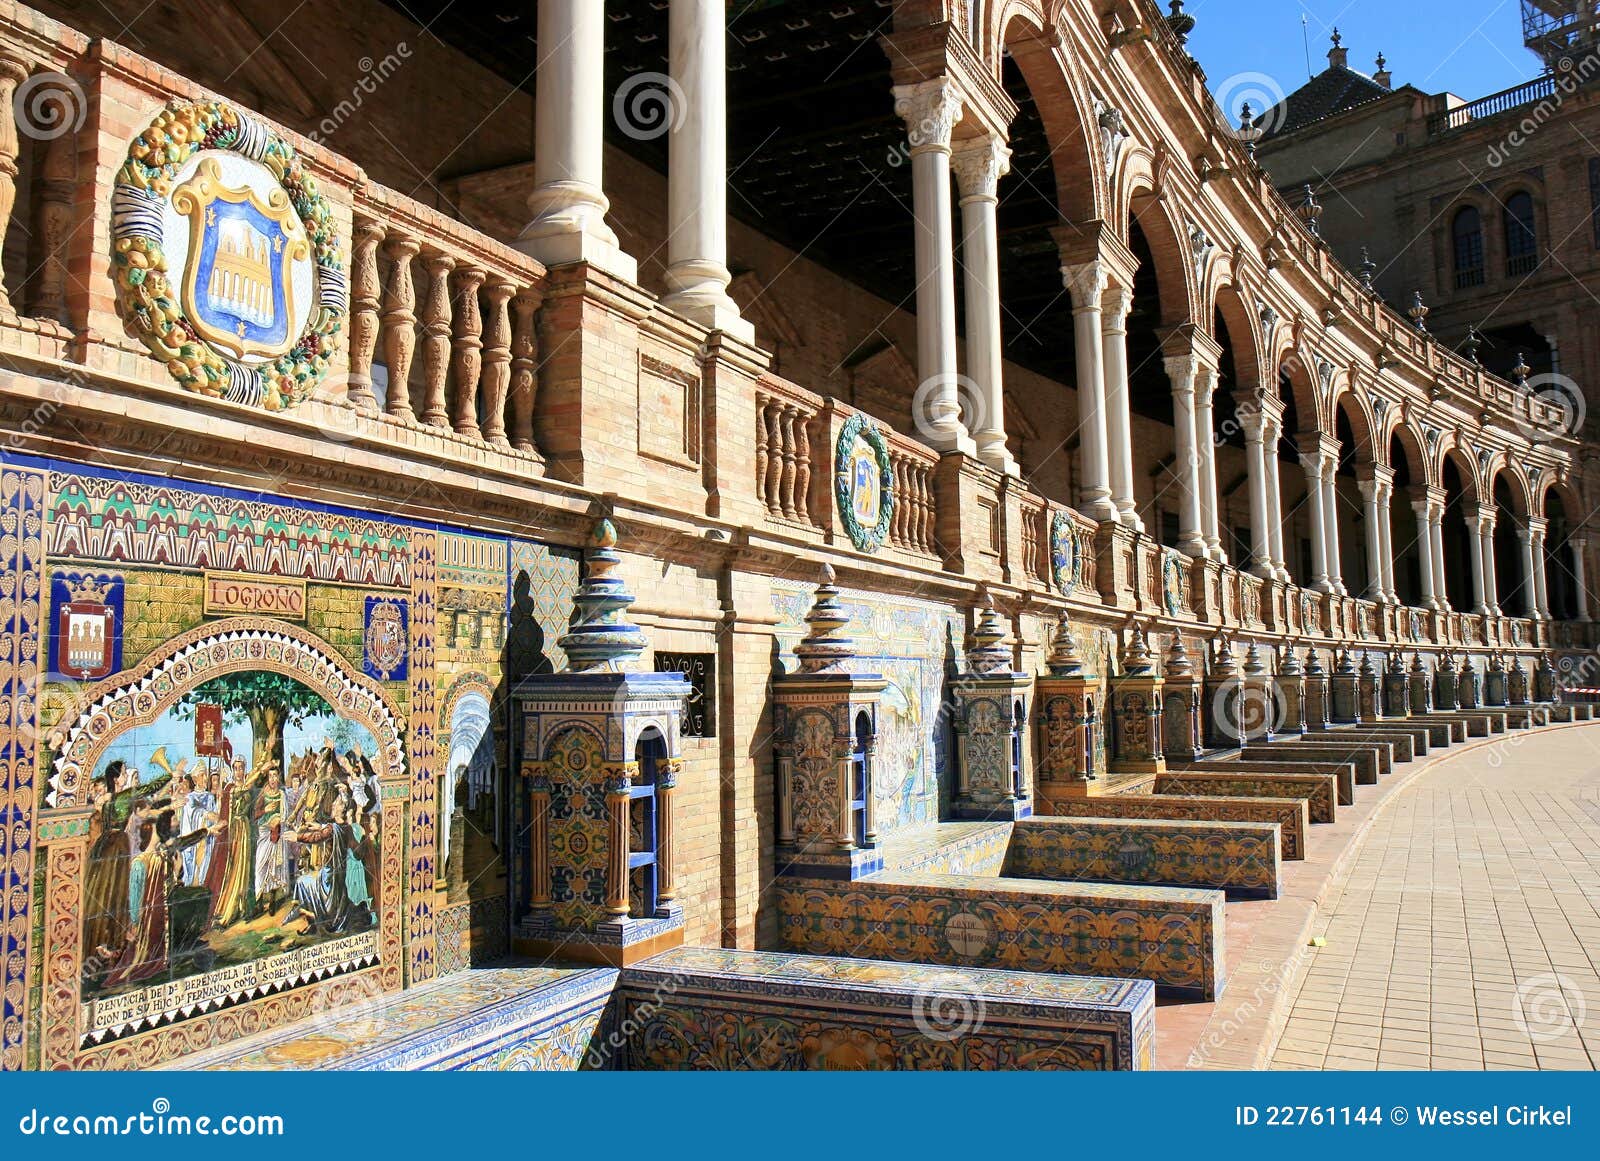 tiled alcoves, plaza de espana, seville, spain